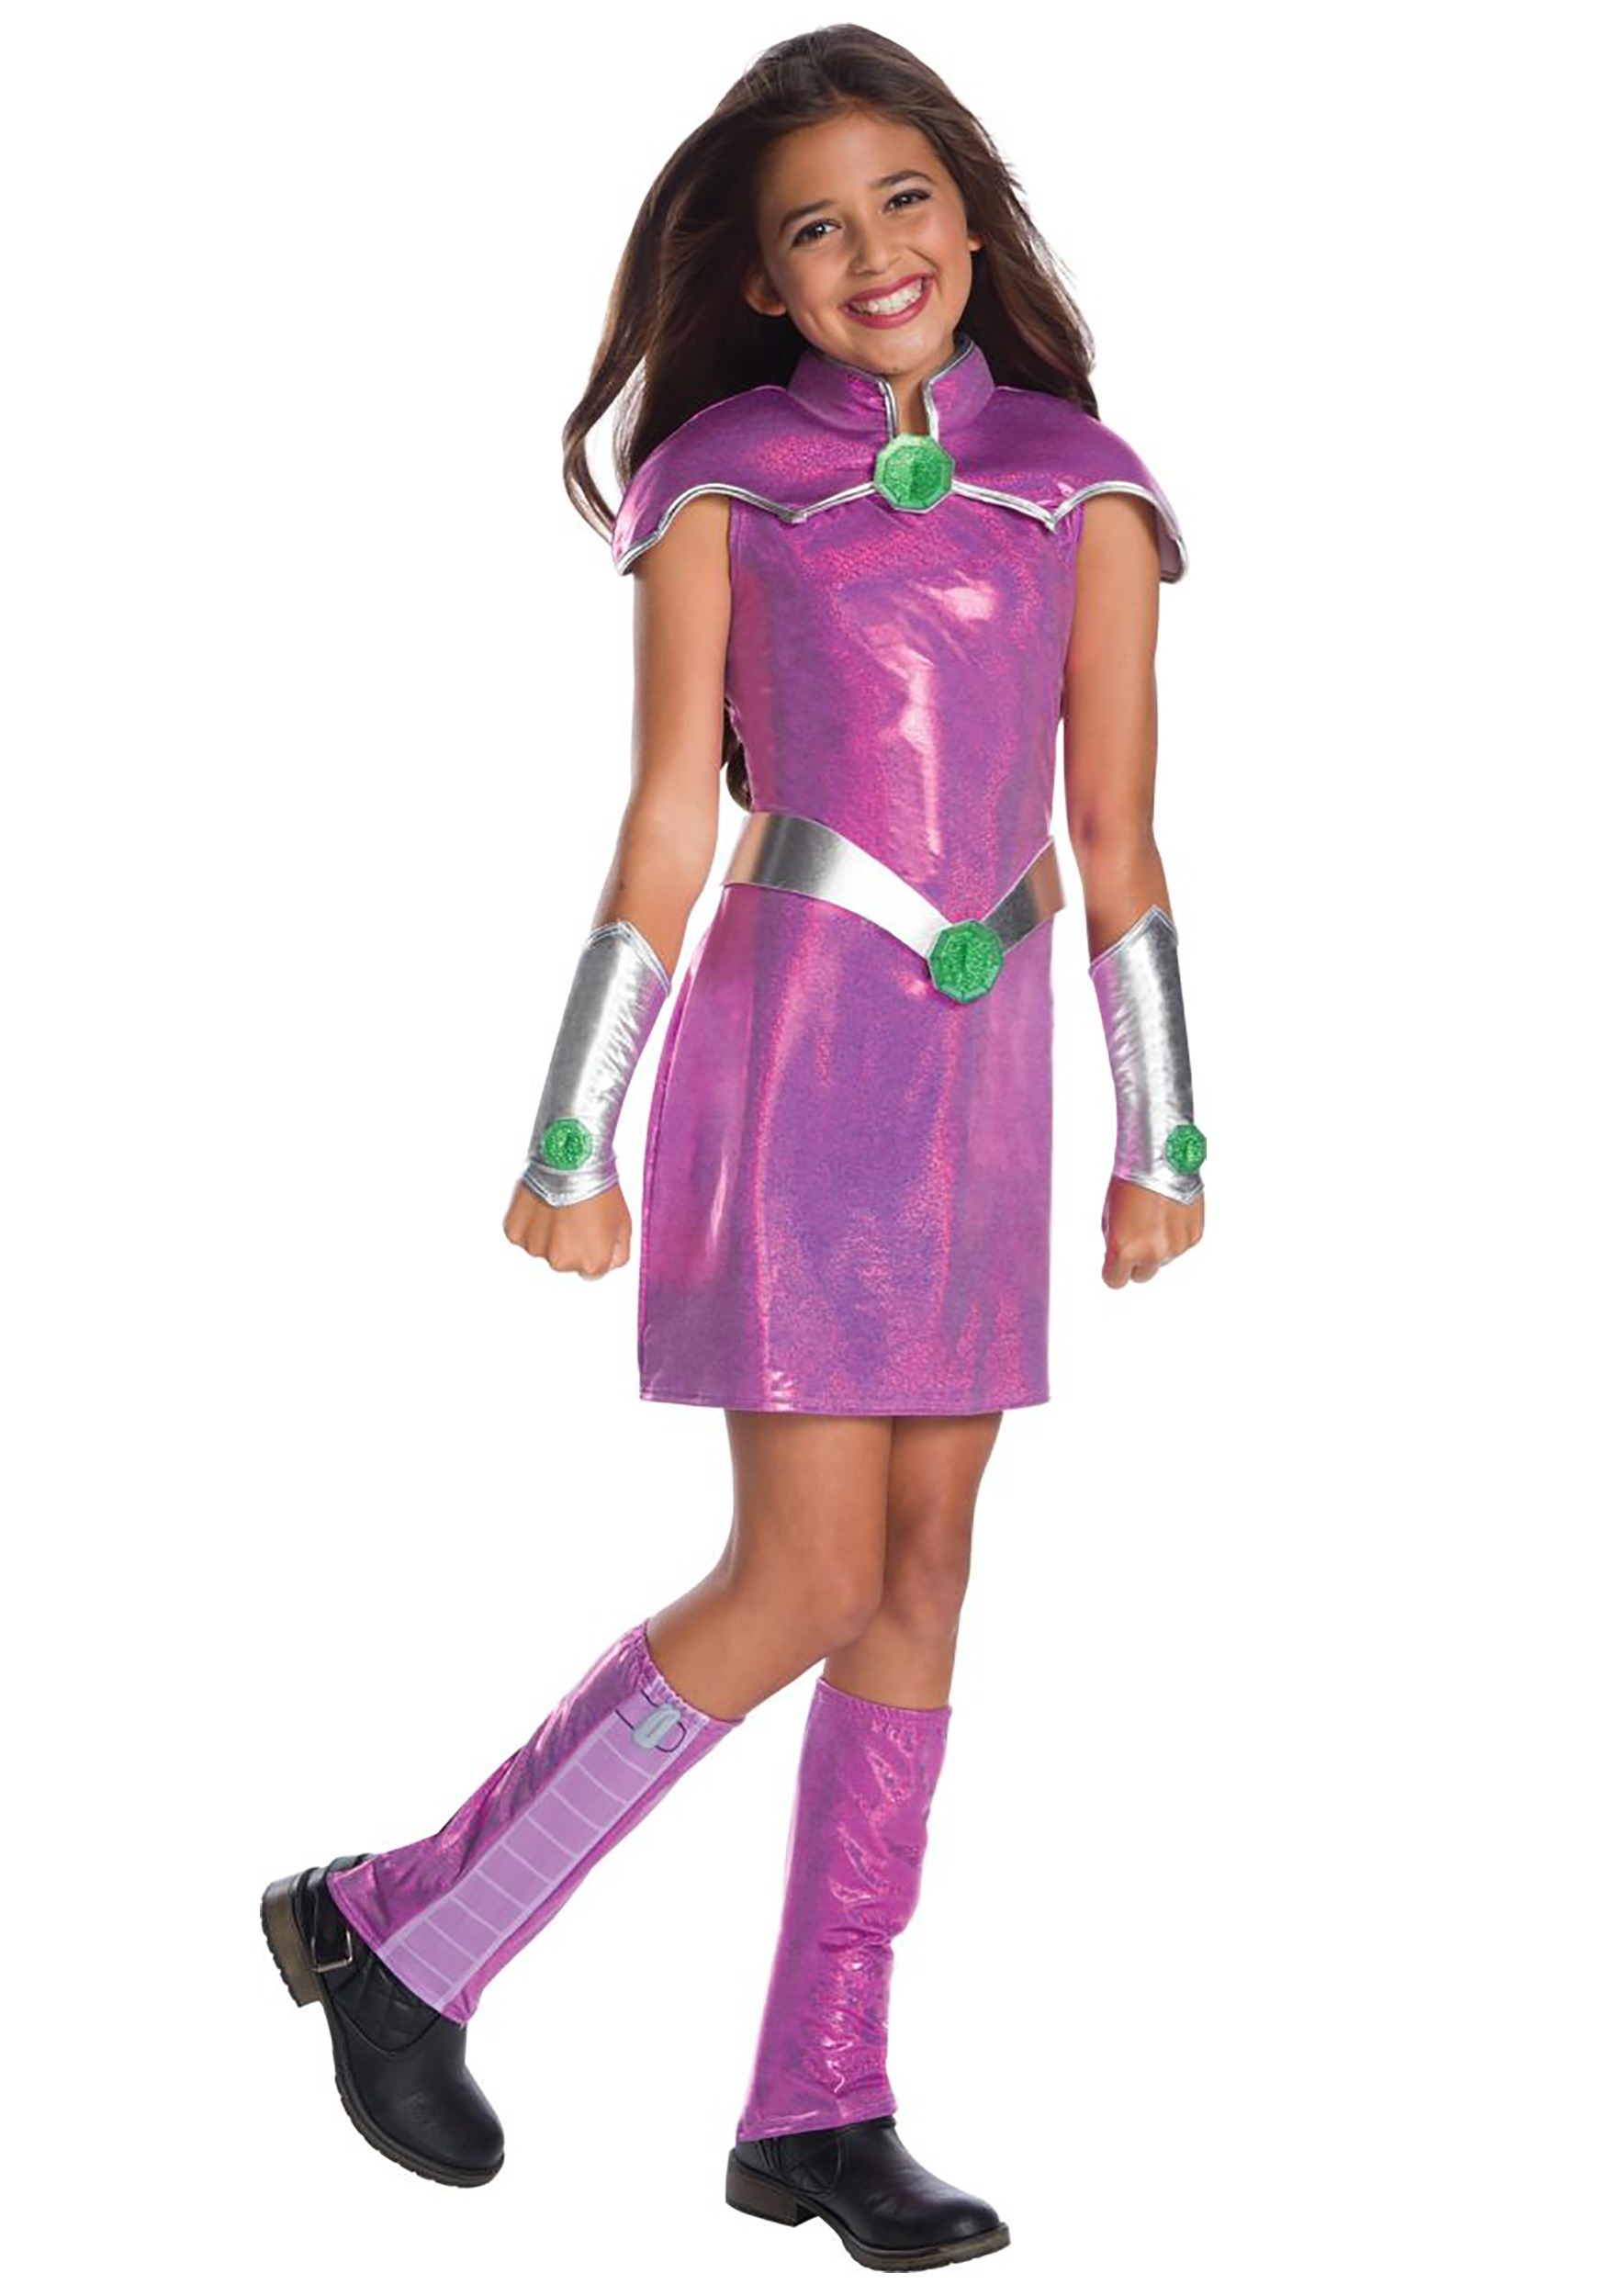 starfire superhero costume for kids